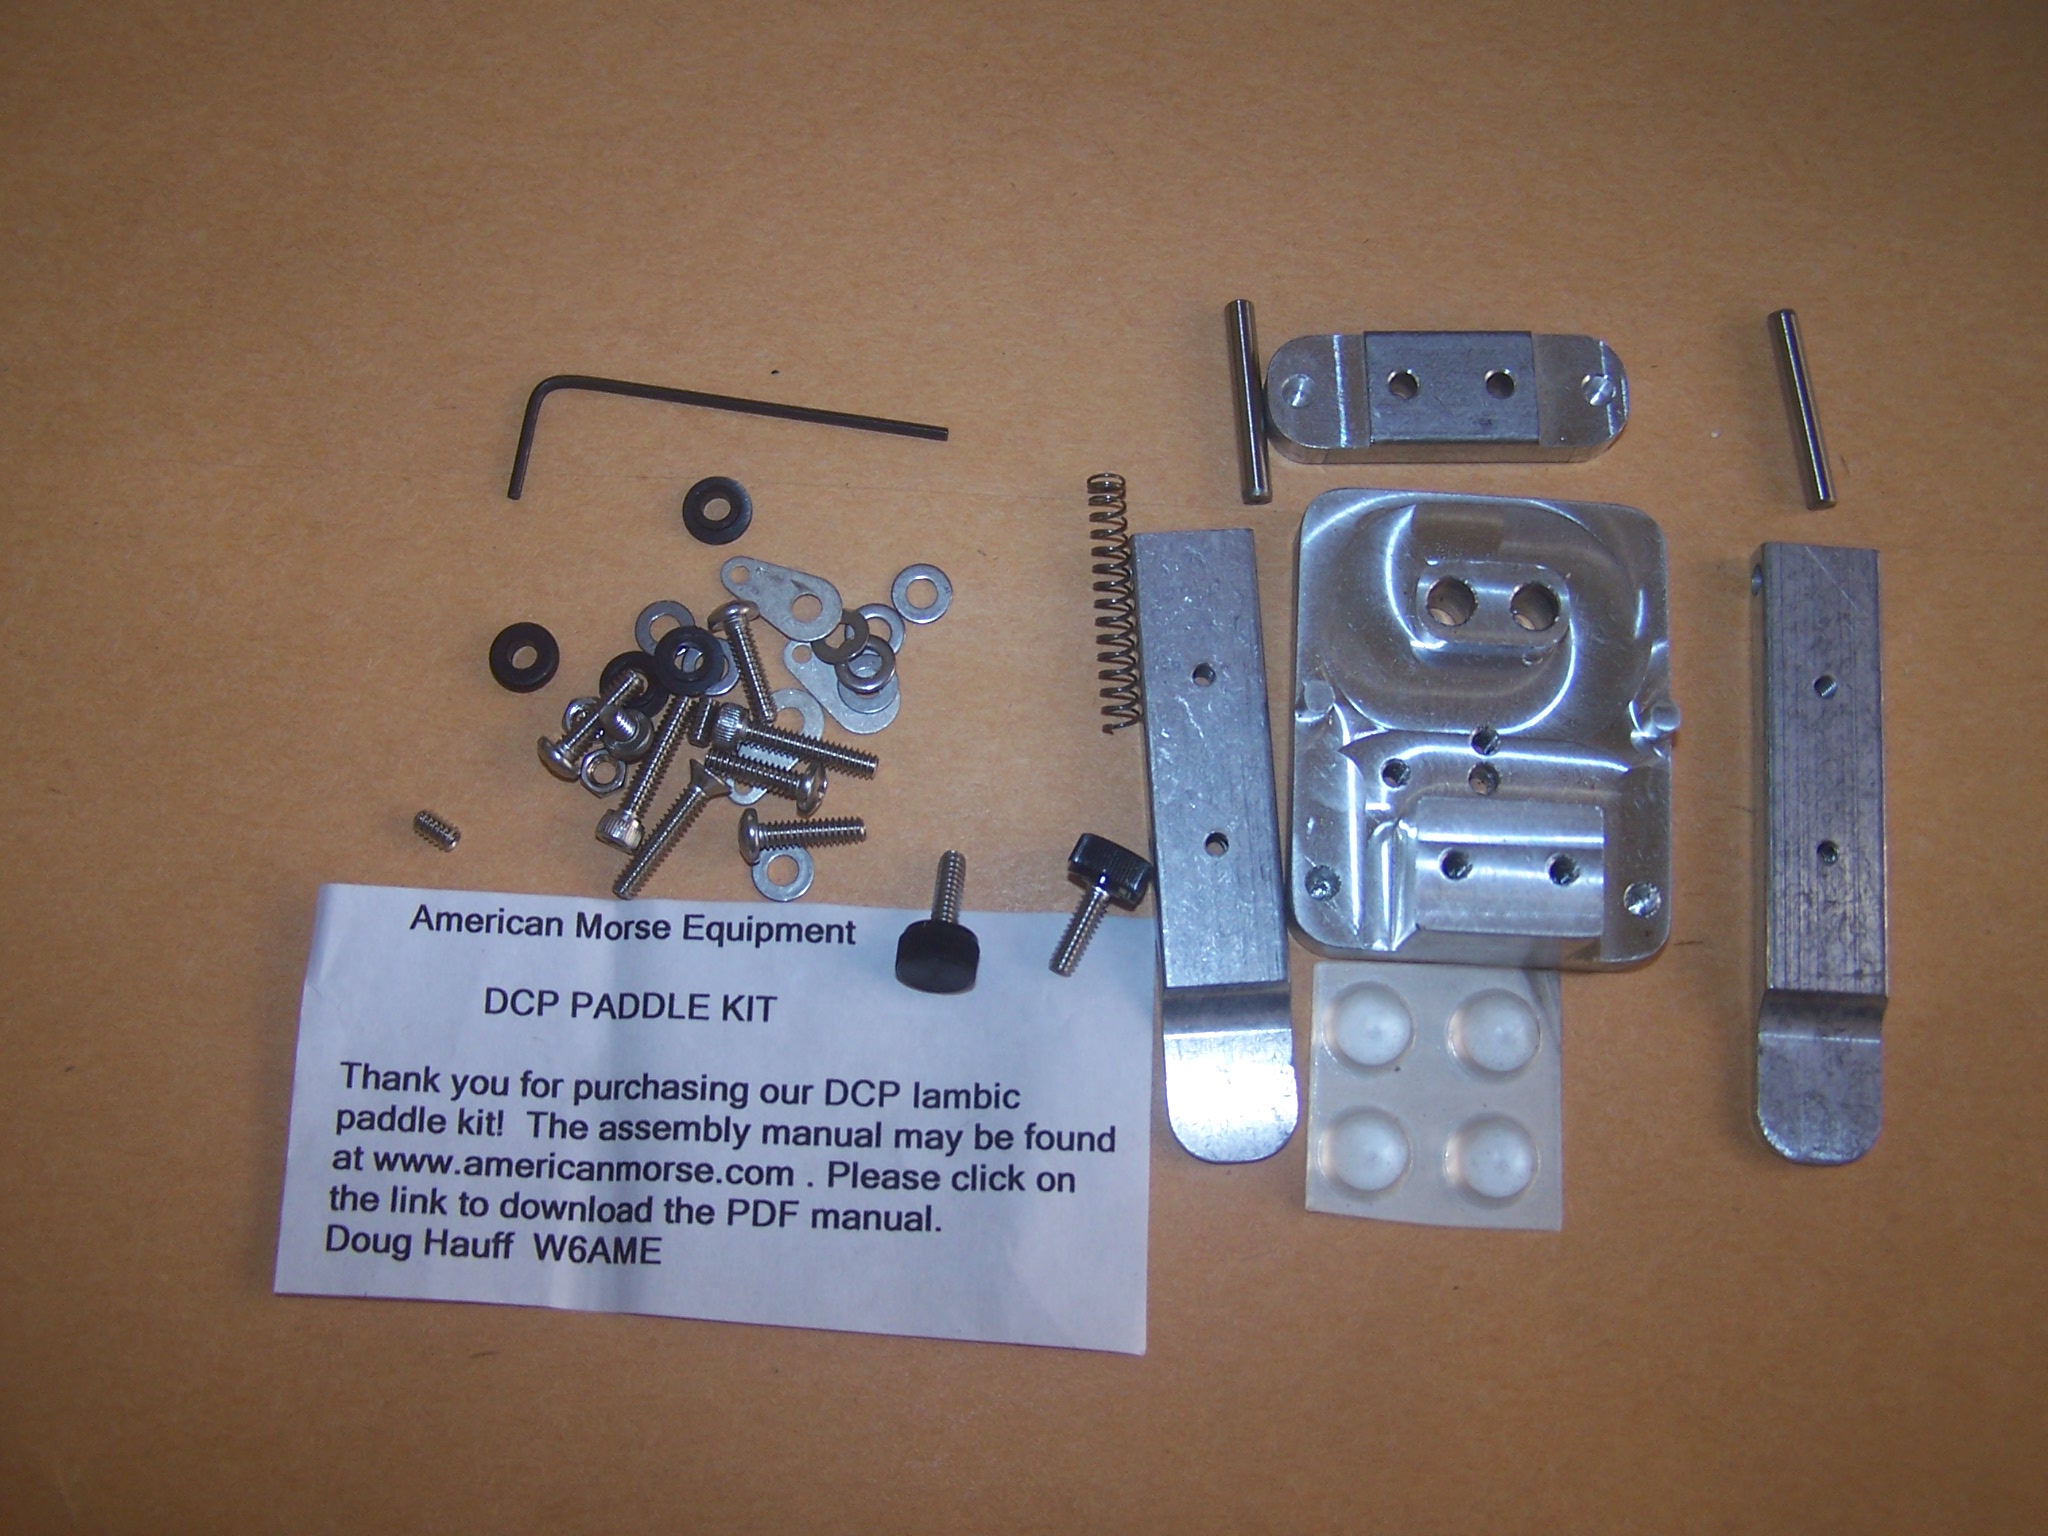 DCP kit manipulateur iambic par American Morse Equipment